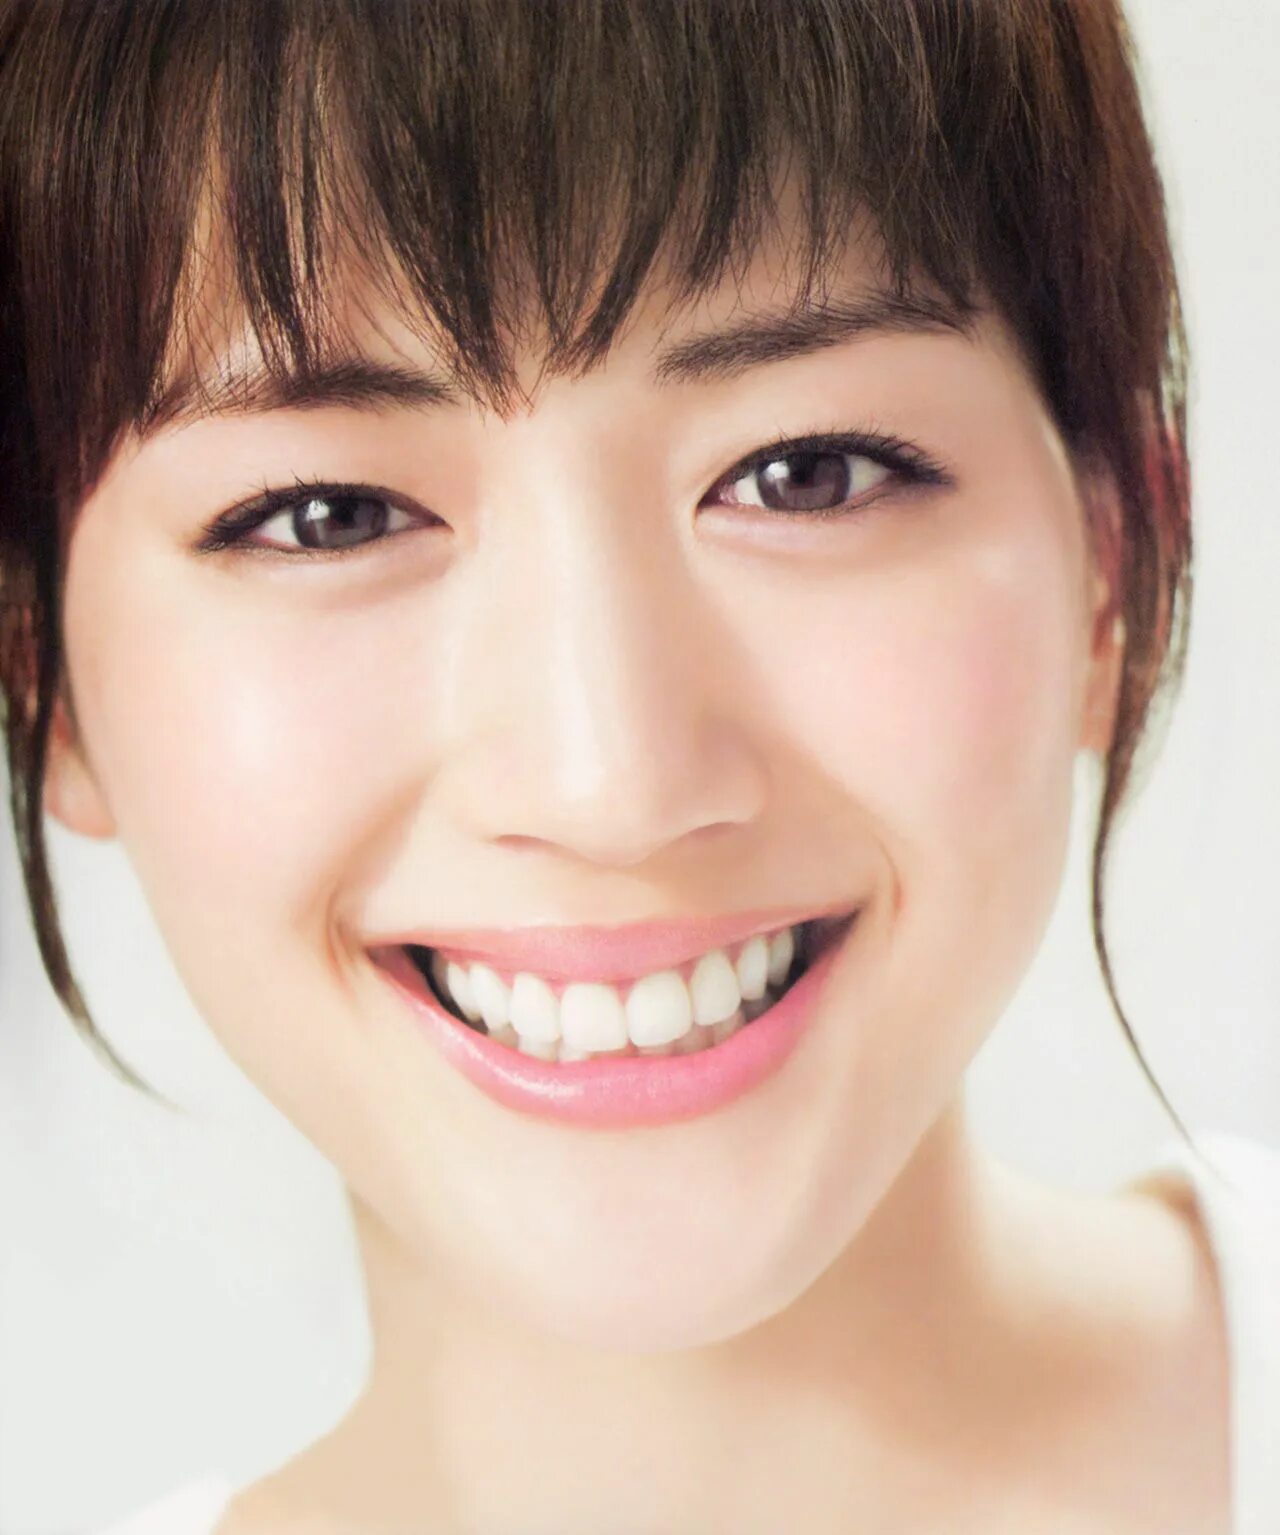 Харука аясэ. Харука Аясэ +18. Харука Аясэ (Haruka Ayase). Азиатская улыбка.